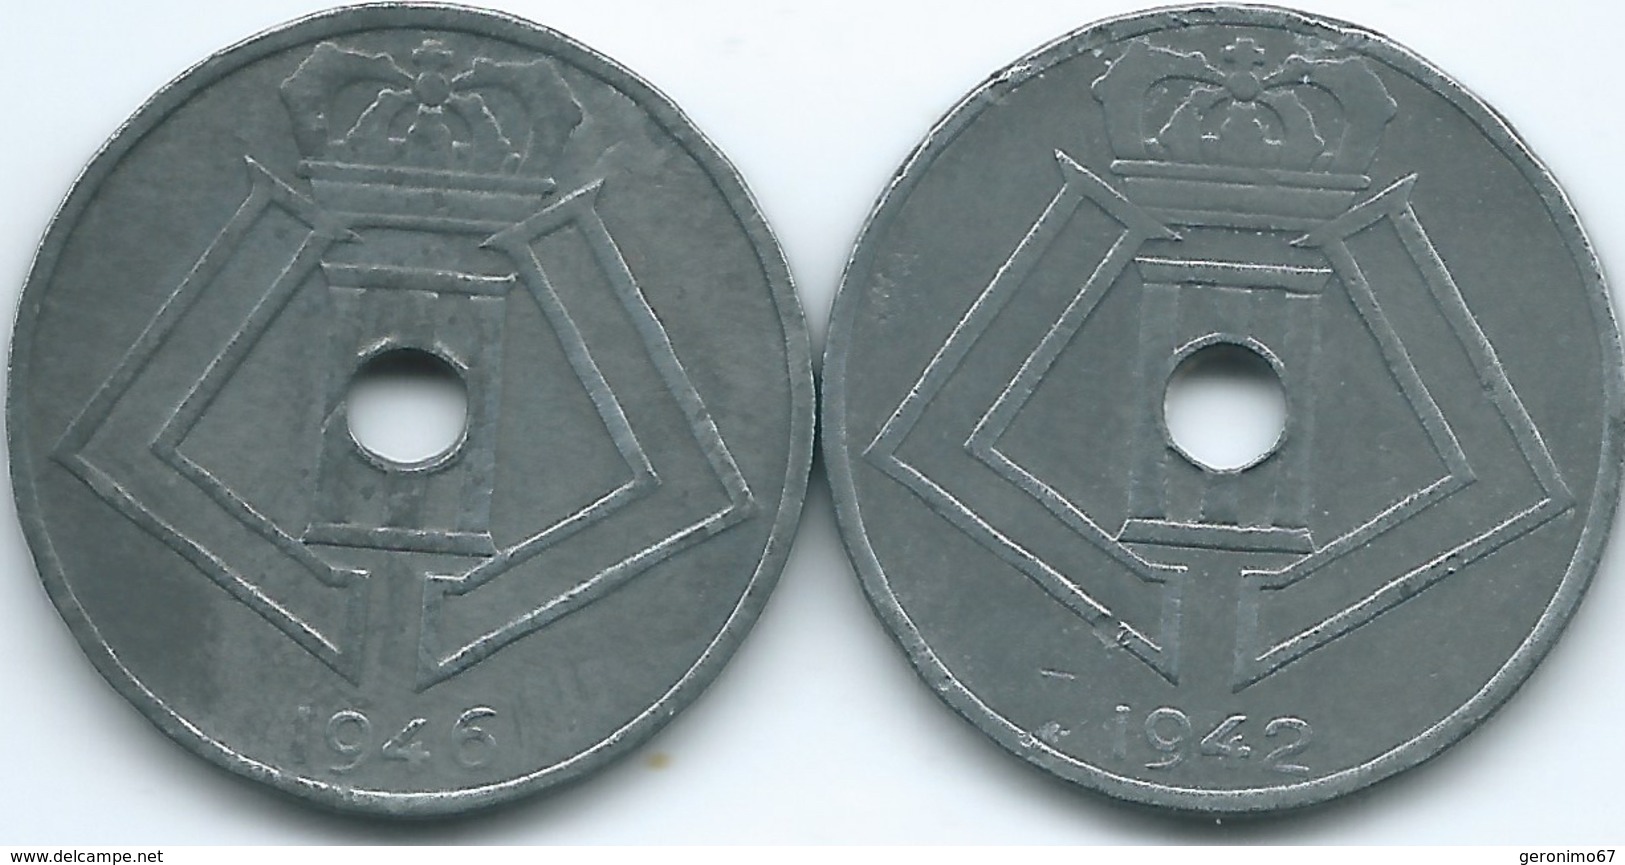 Belgium - Leopold III - Regency - 25 Centimes - 1946 - KM131 (Dutch) & 1942 - KM132 (French) - 10 Centimes & 25 Centimes